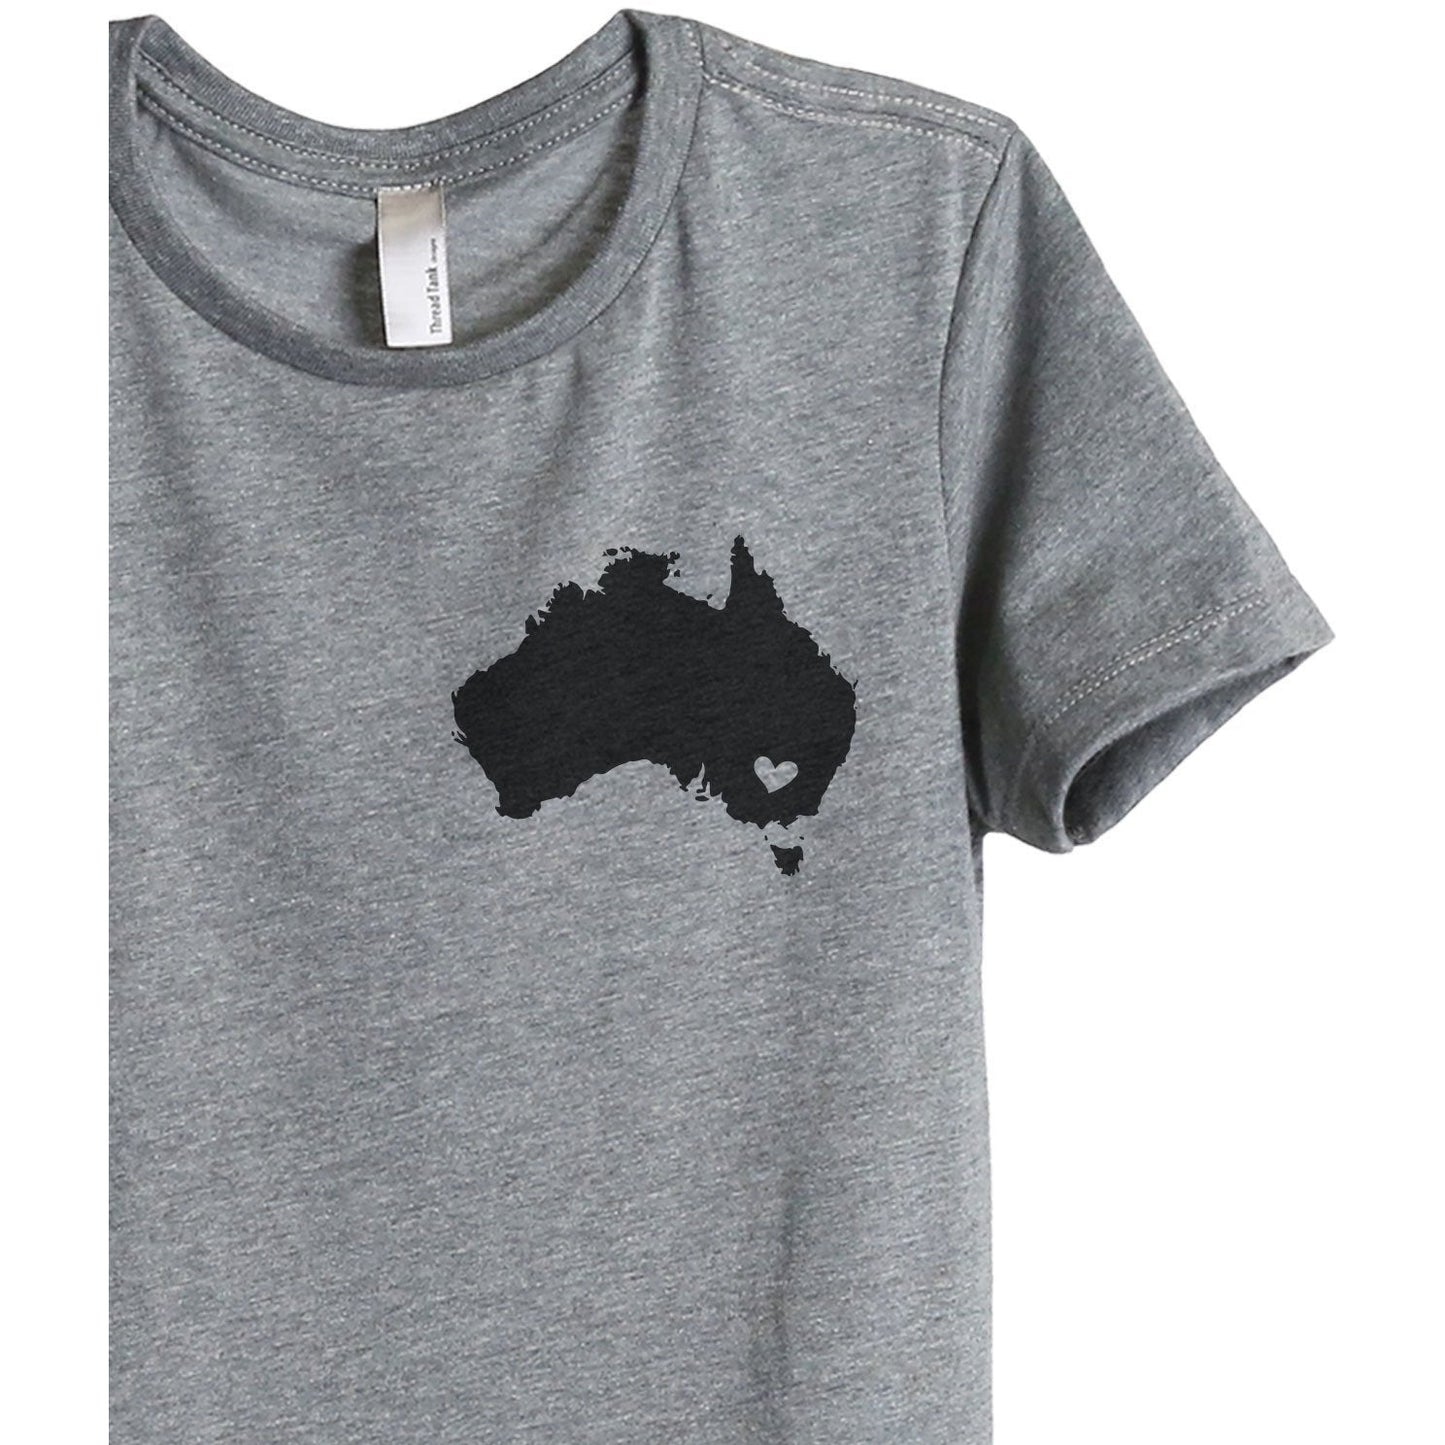 Australia Heart Women's Relaxed Crewneck T-Shirt Top Tee Heather Grey Zoom Details
